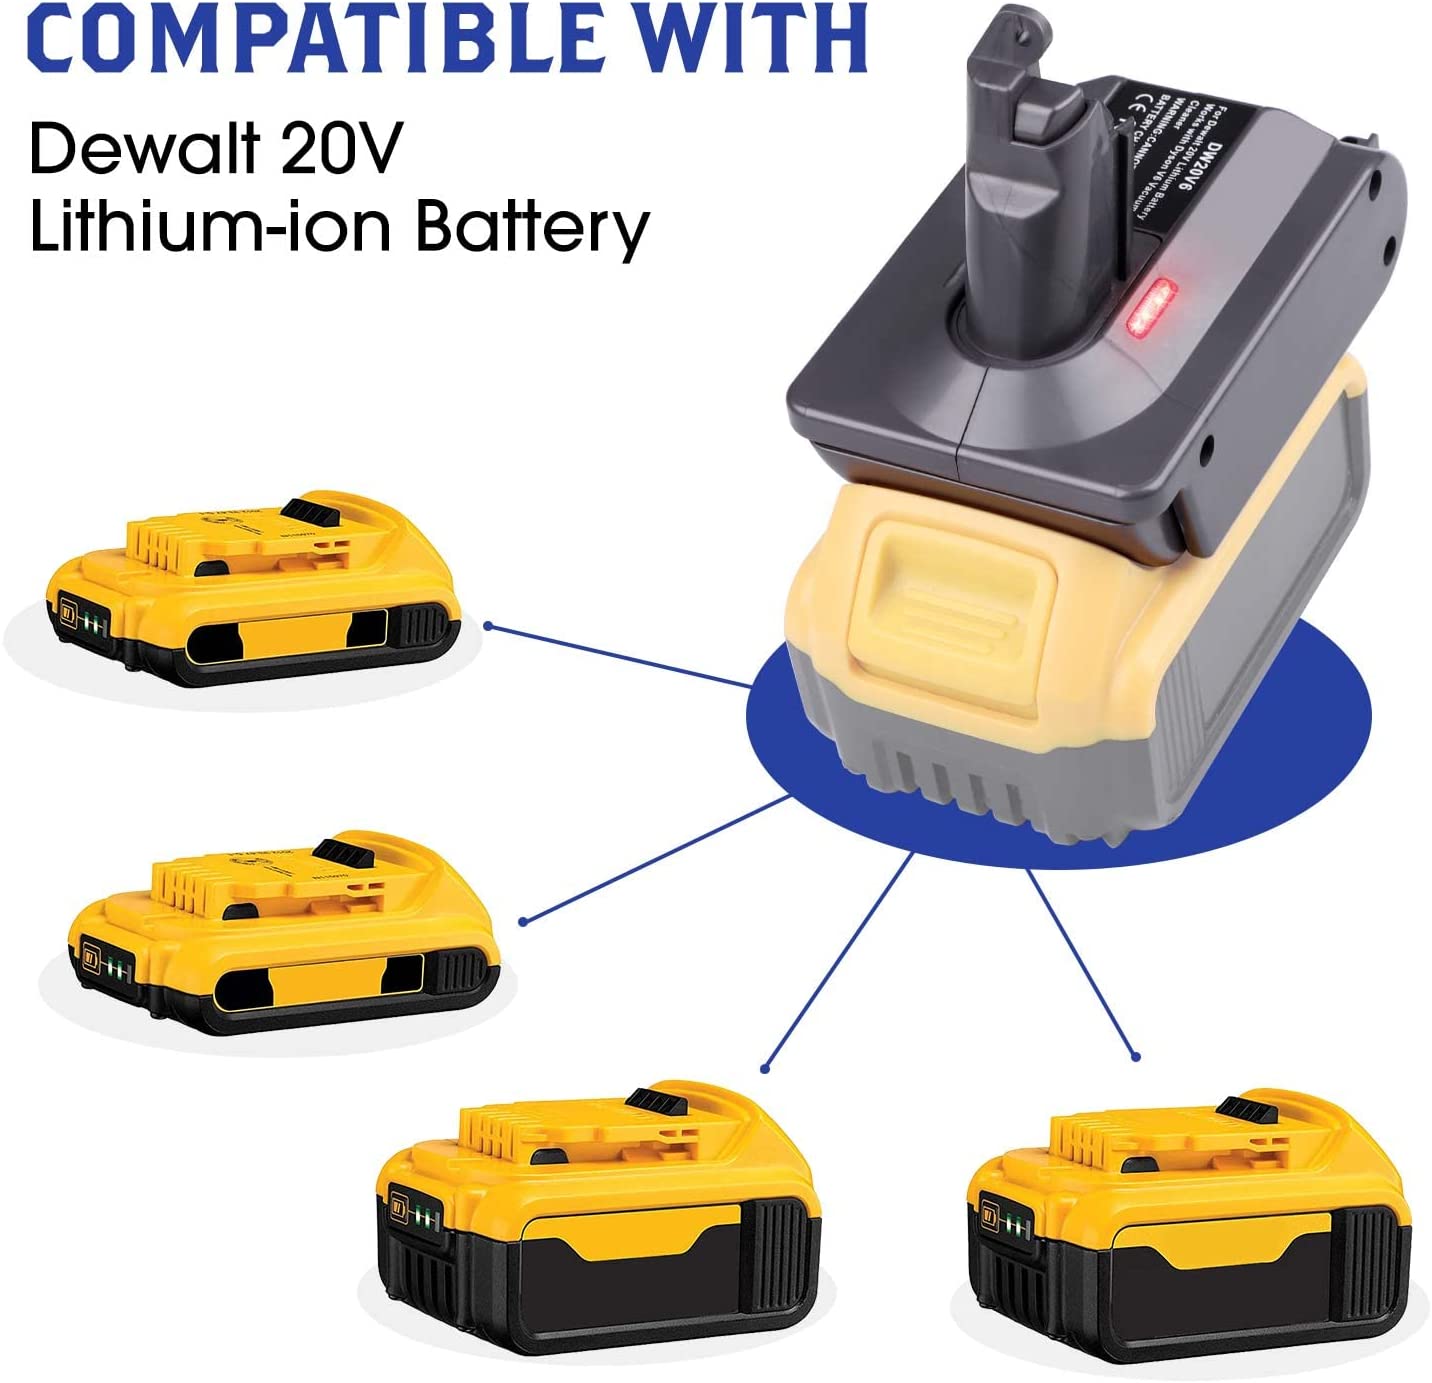 Dyson Battery Adapter mo Dewalt 20V Lithium Battery Kua Hurihia ki Dyson V7 Battery